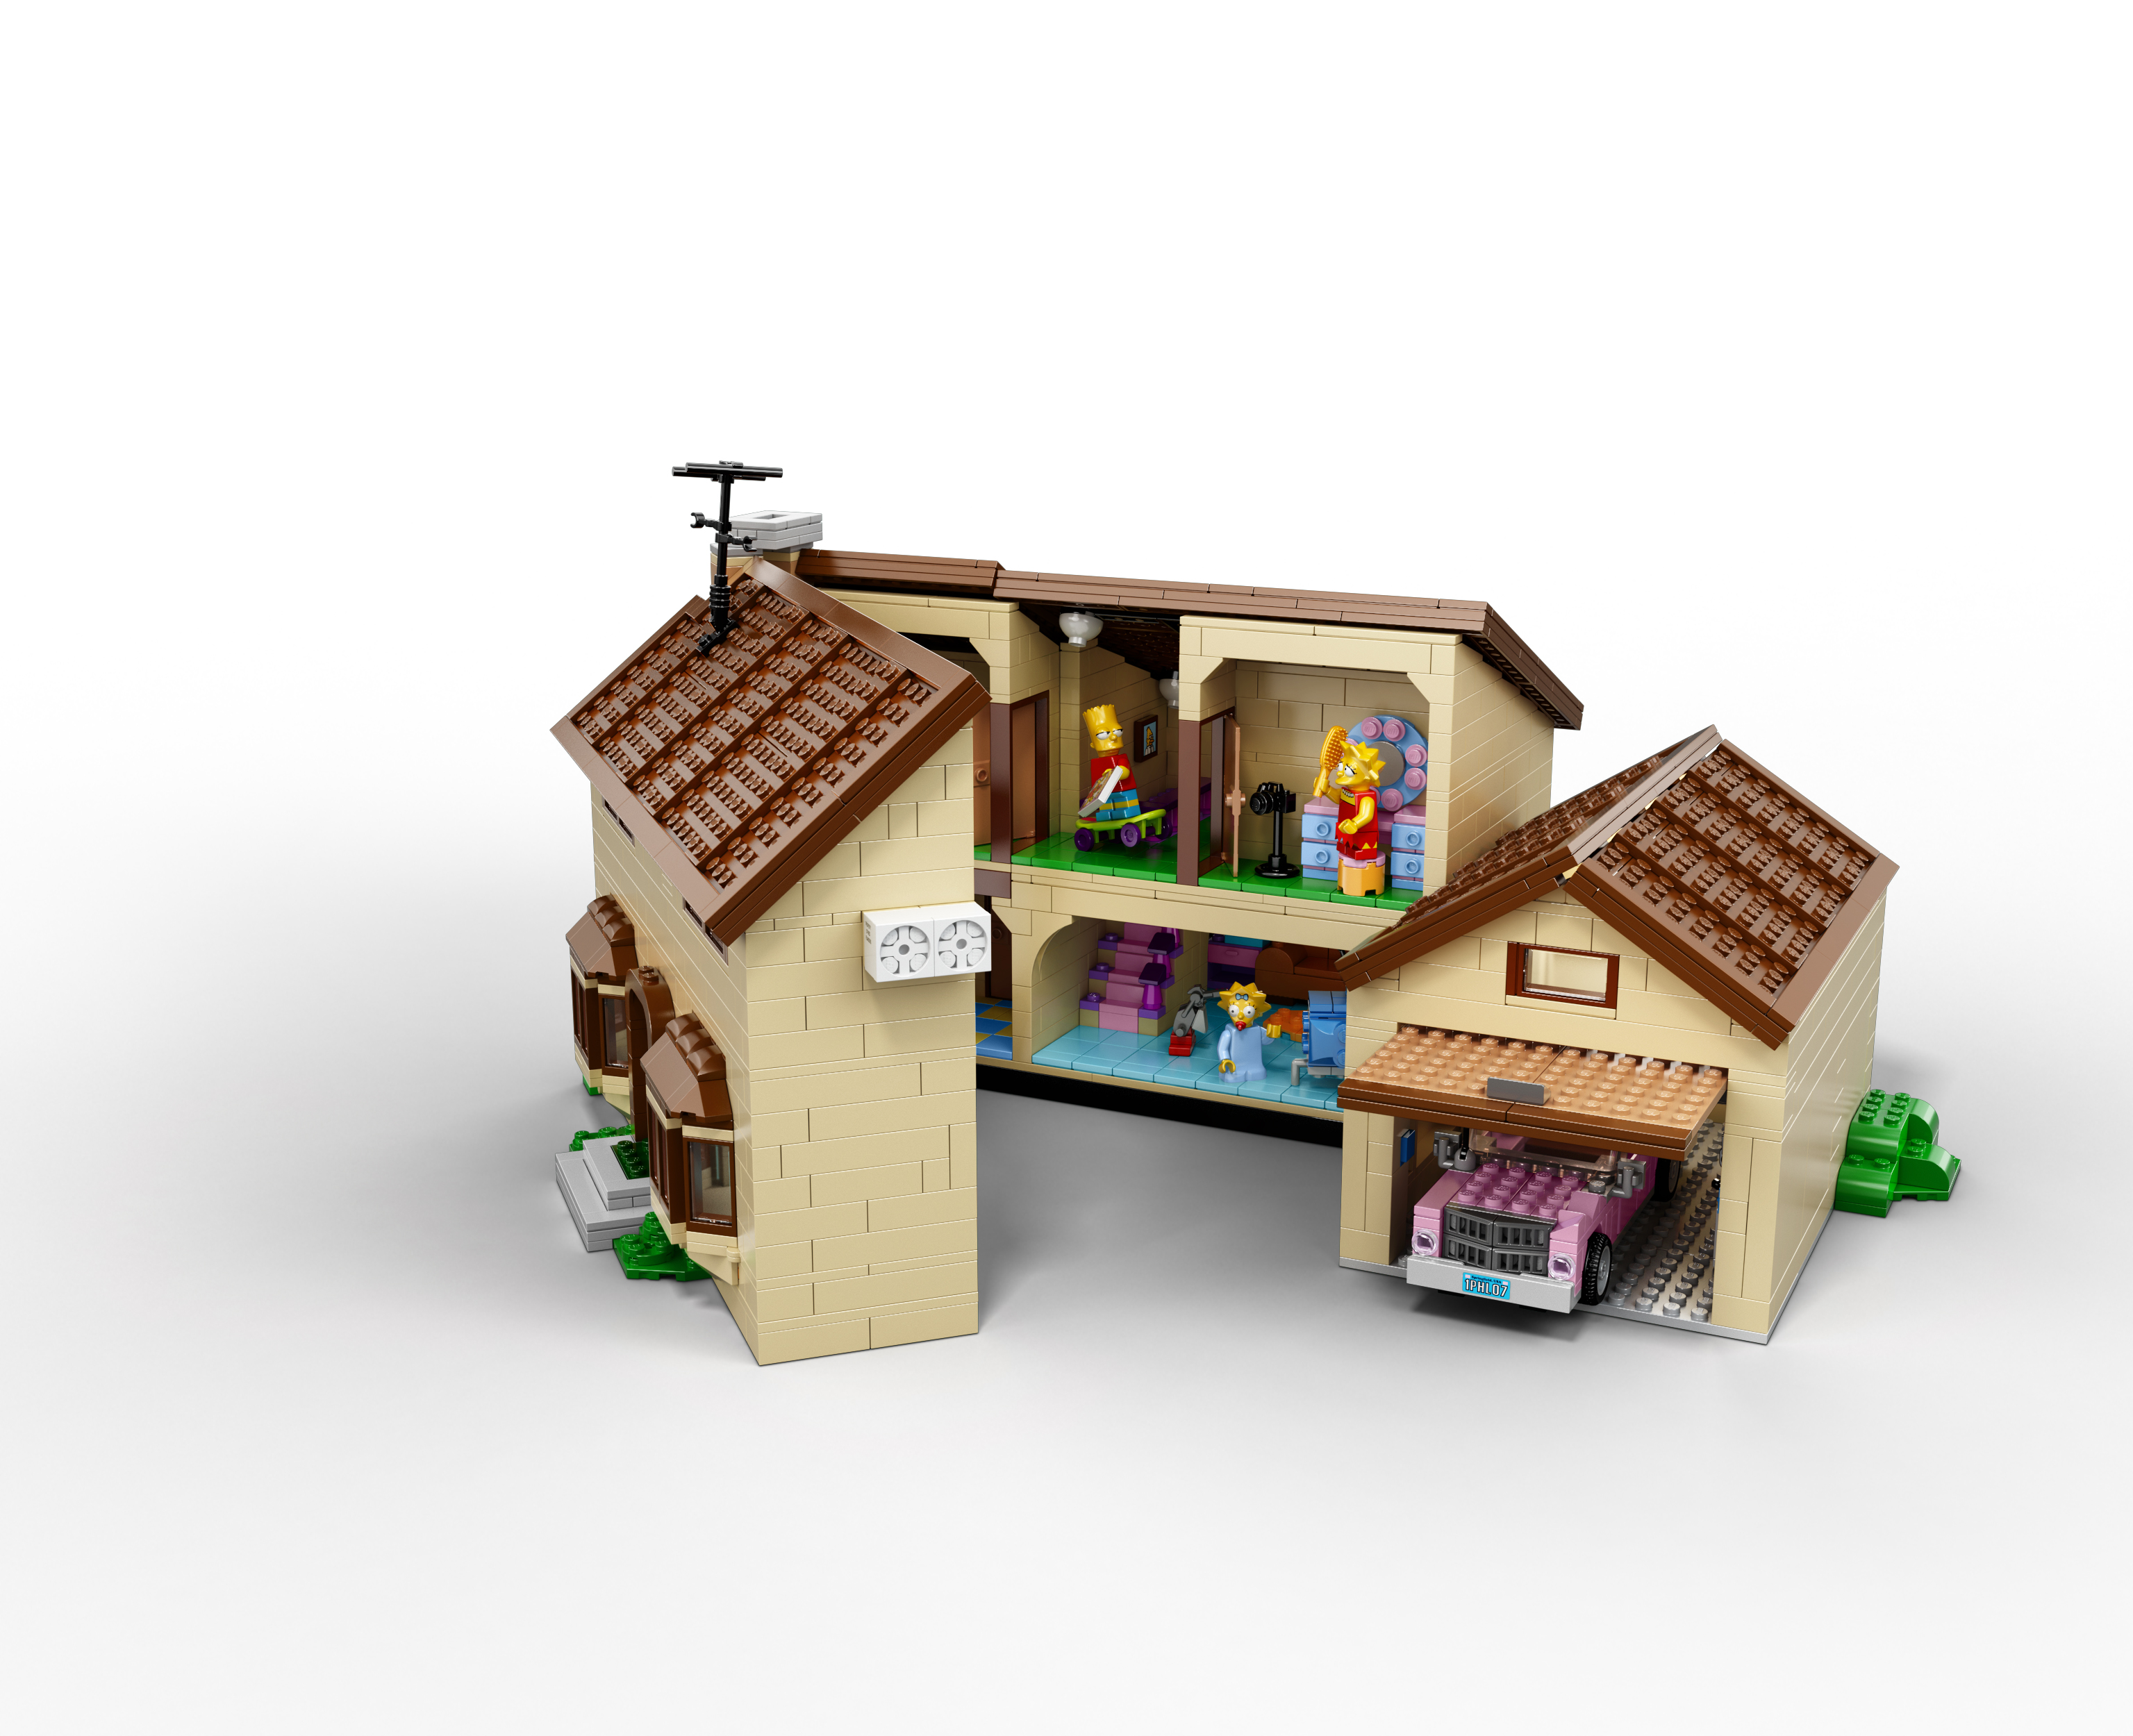 LEGO Reveals 71006 The Simpsons House - FBTB